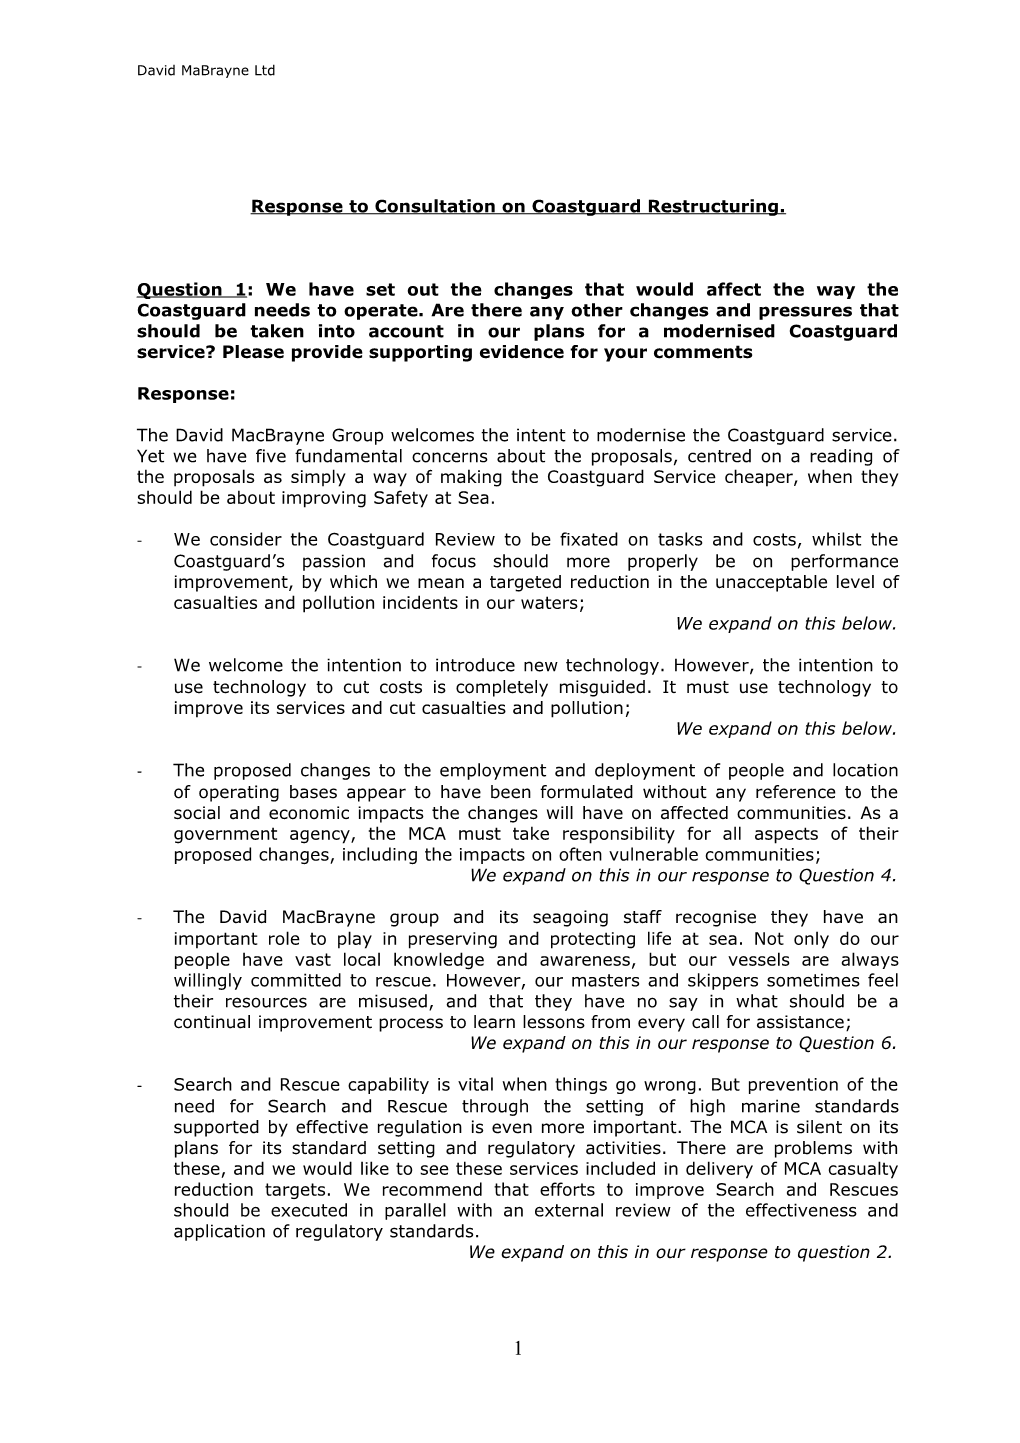 Response to Consultation on Coastguard Restructuring